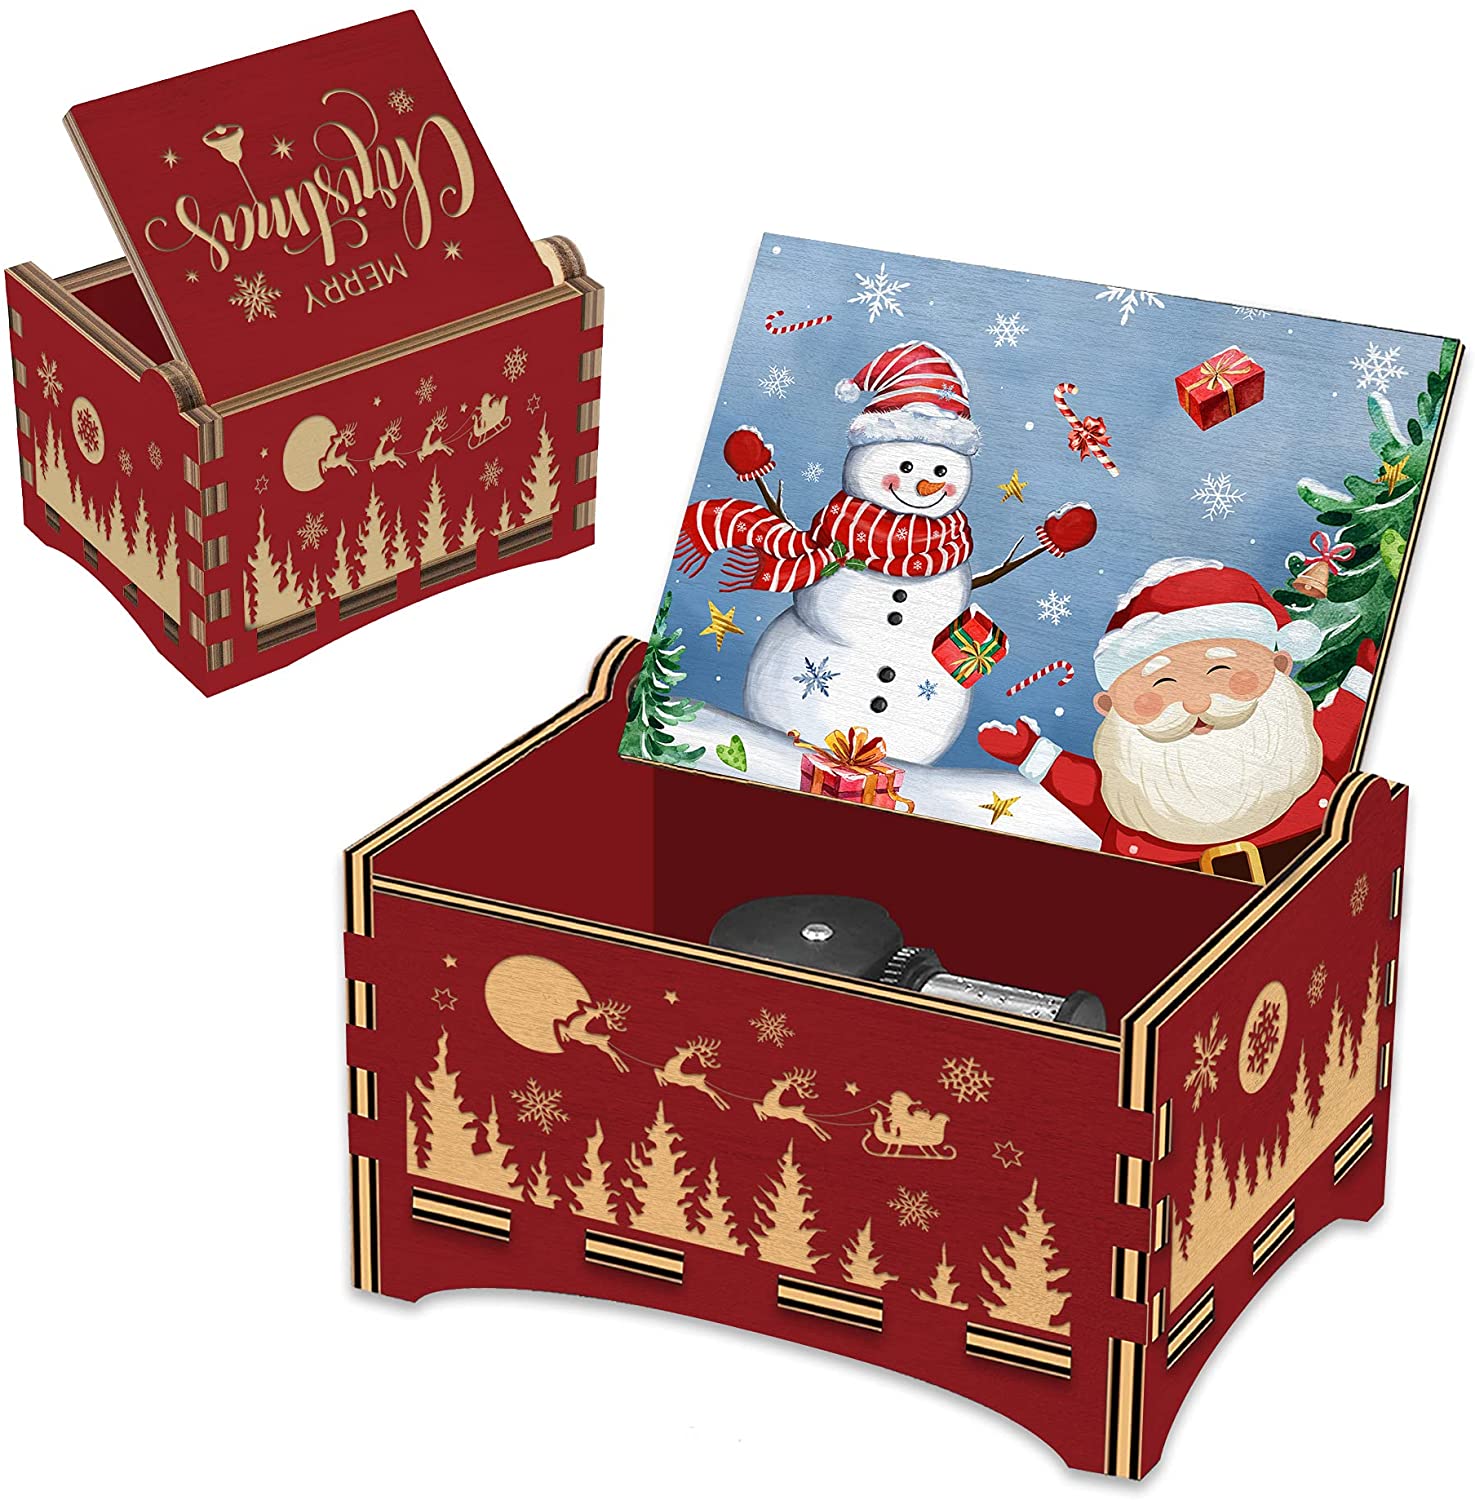 Christmas Gift Box Ideas